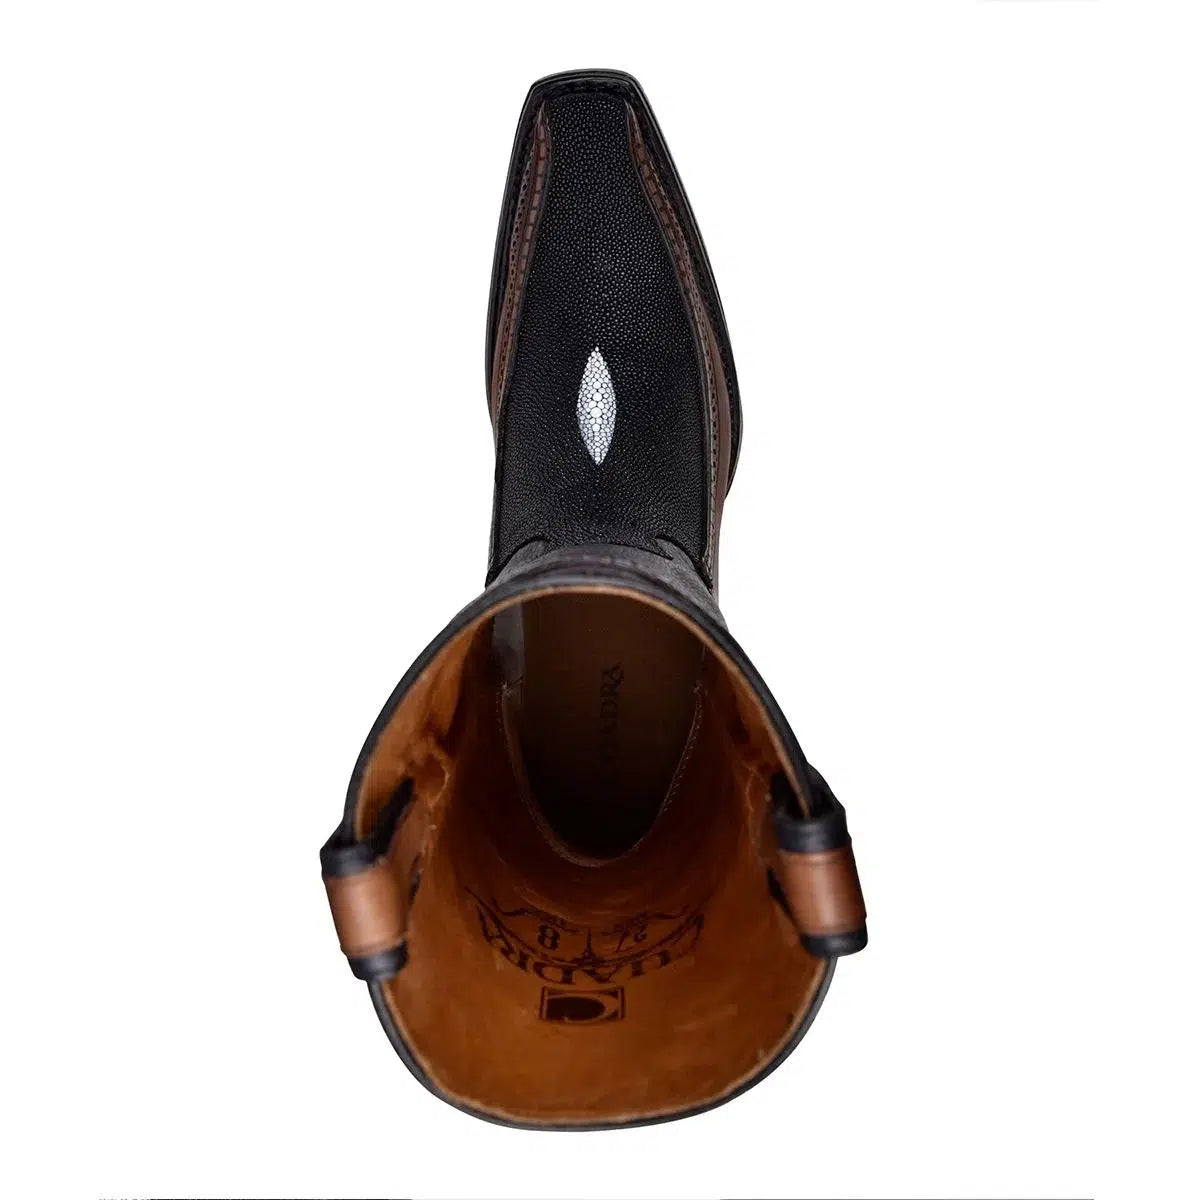 1B1DMA - Cuadra black and brown casual cowboy stingray boots for men-Kuet.us